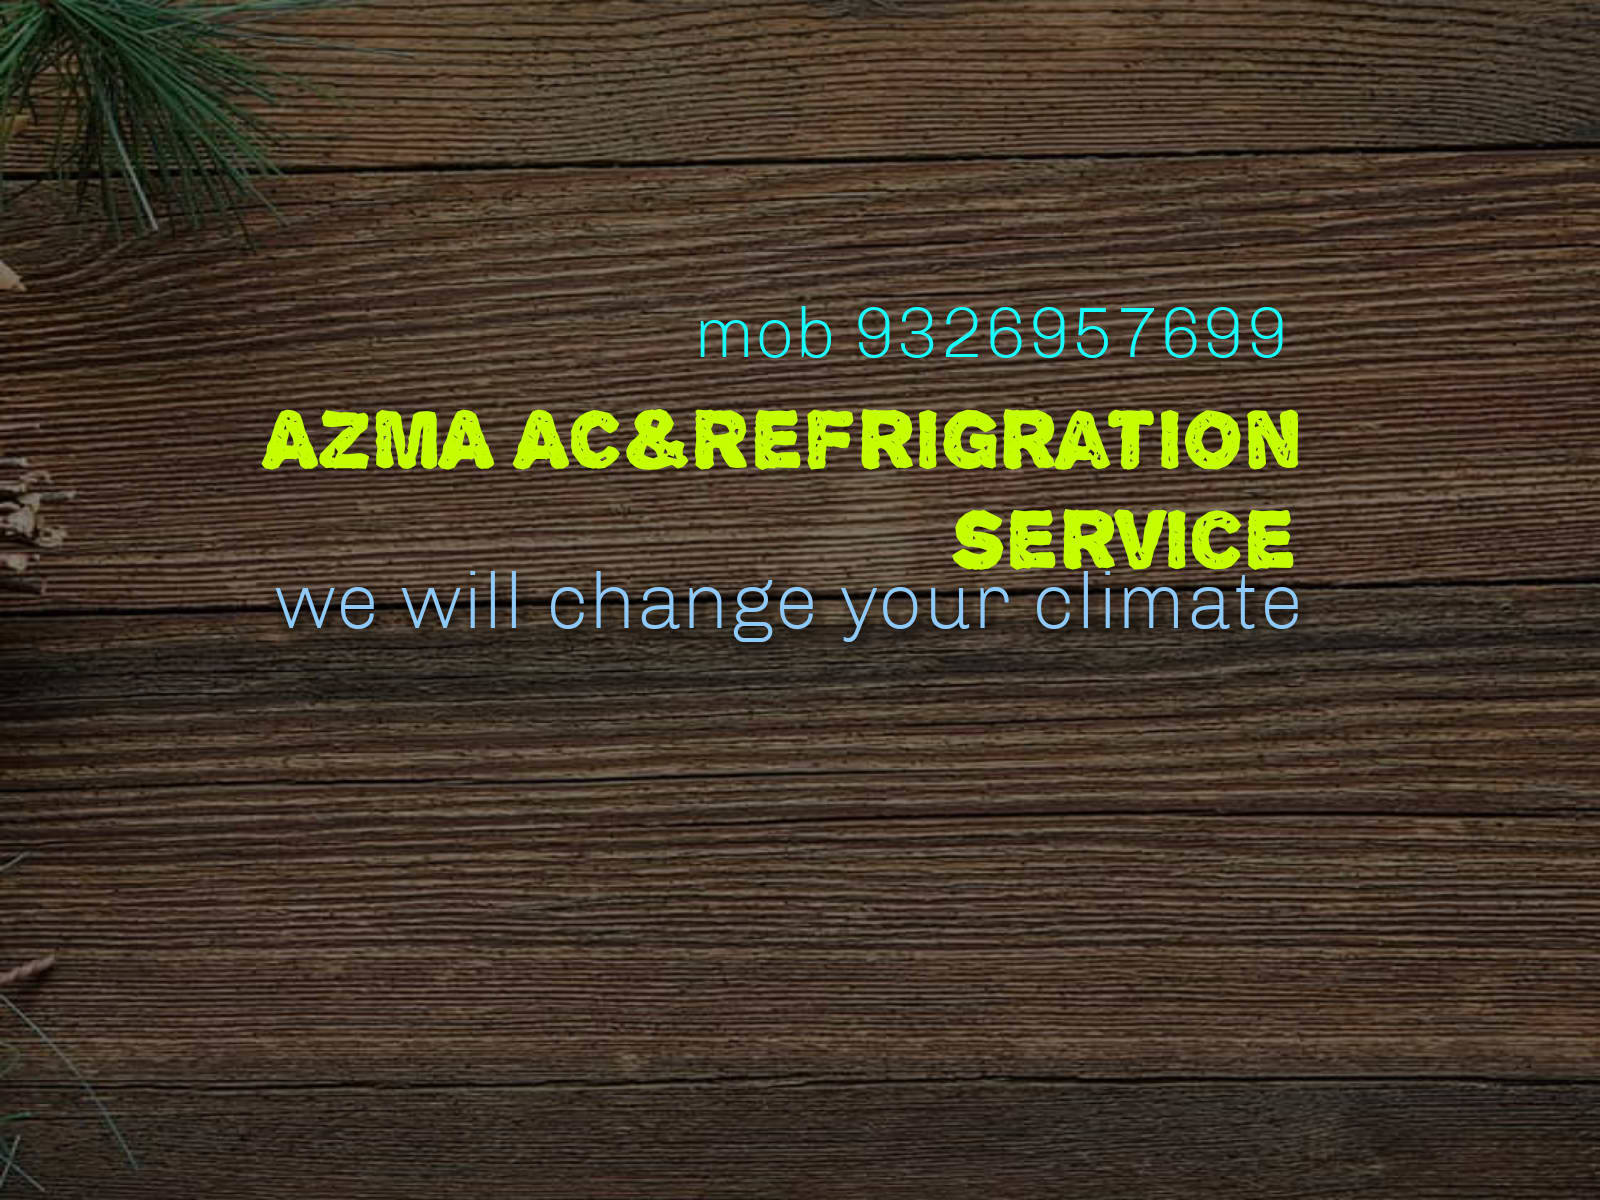 AZMA AC & REFRIGERATION SERVICE